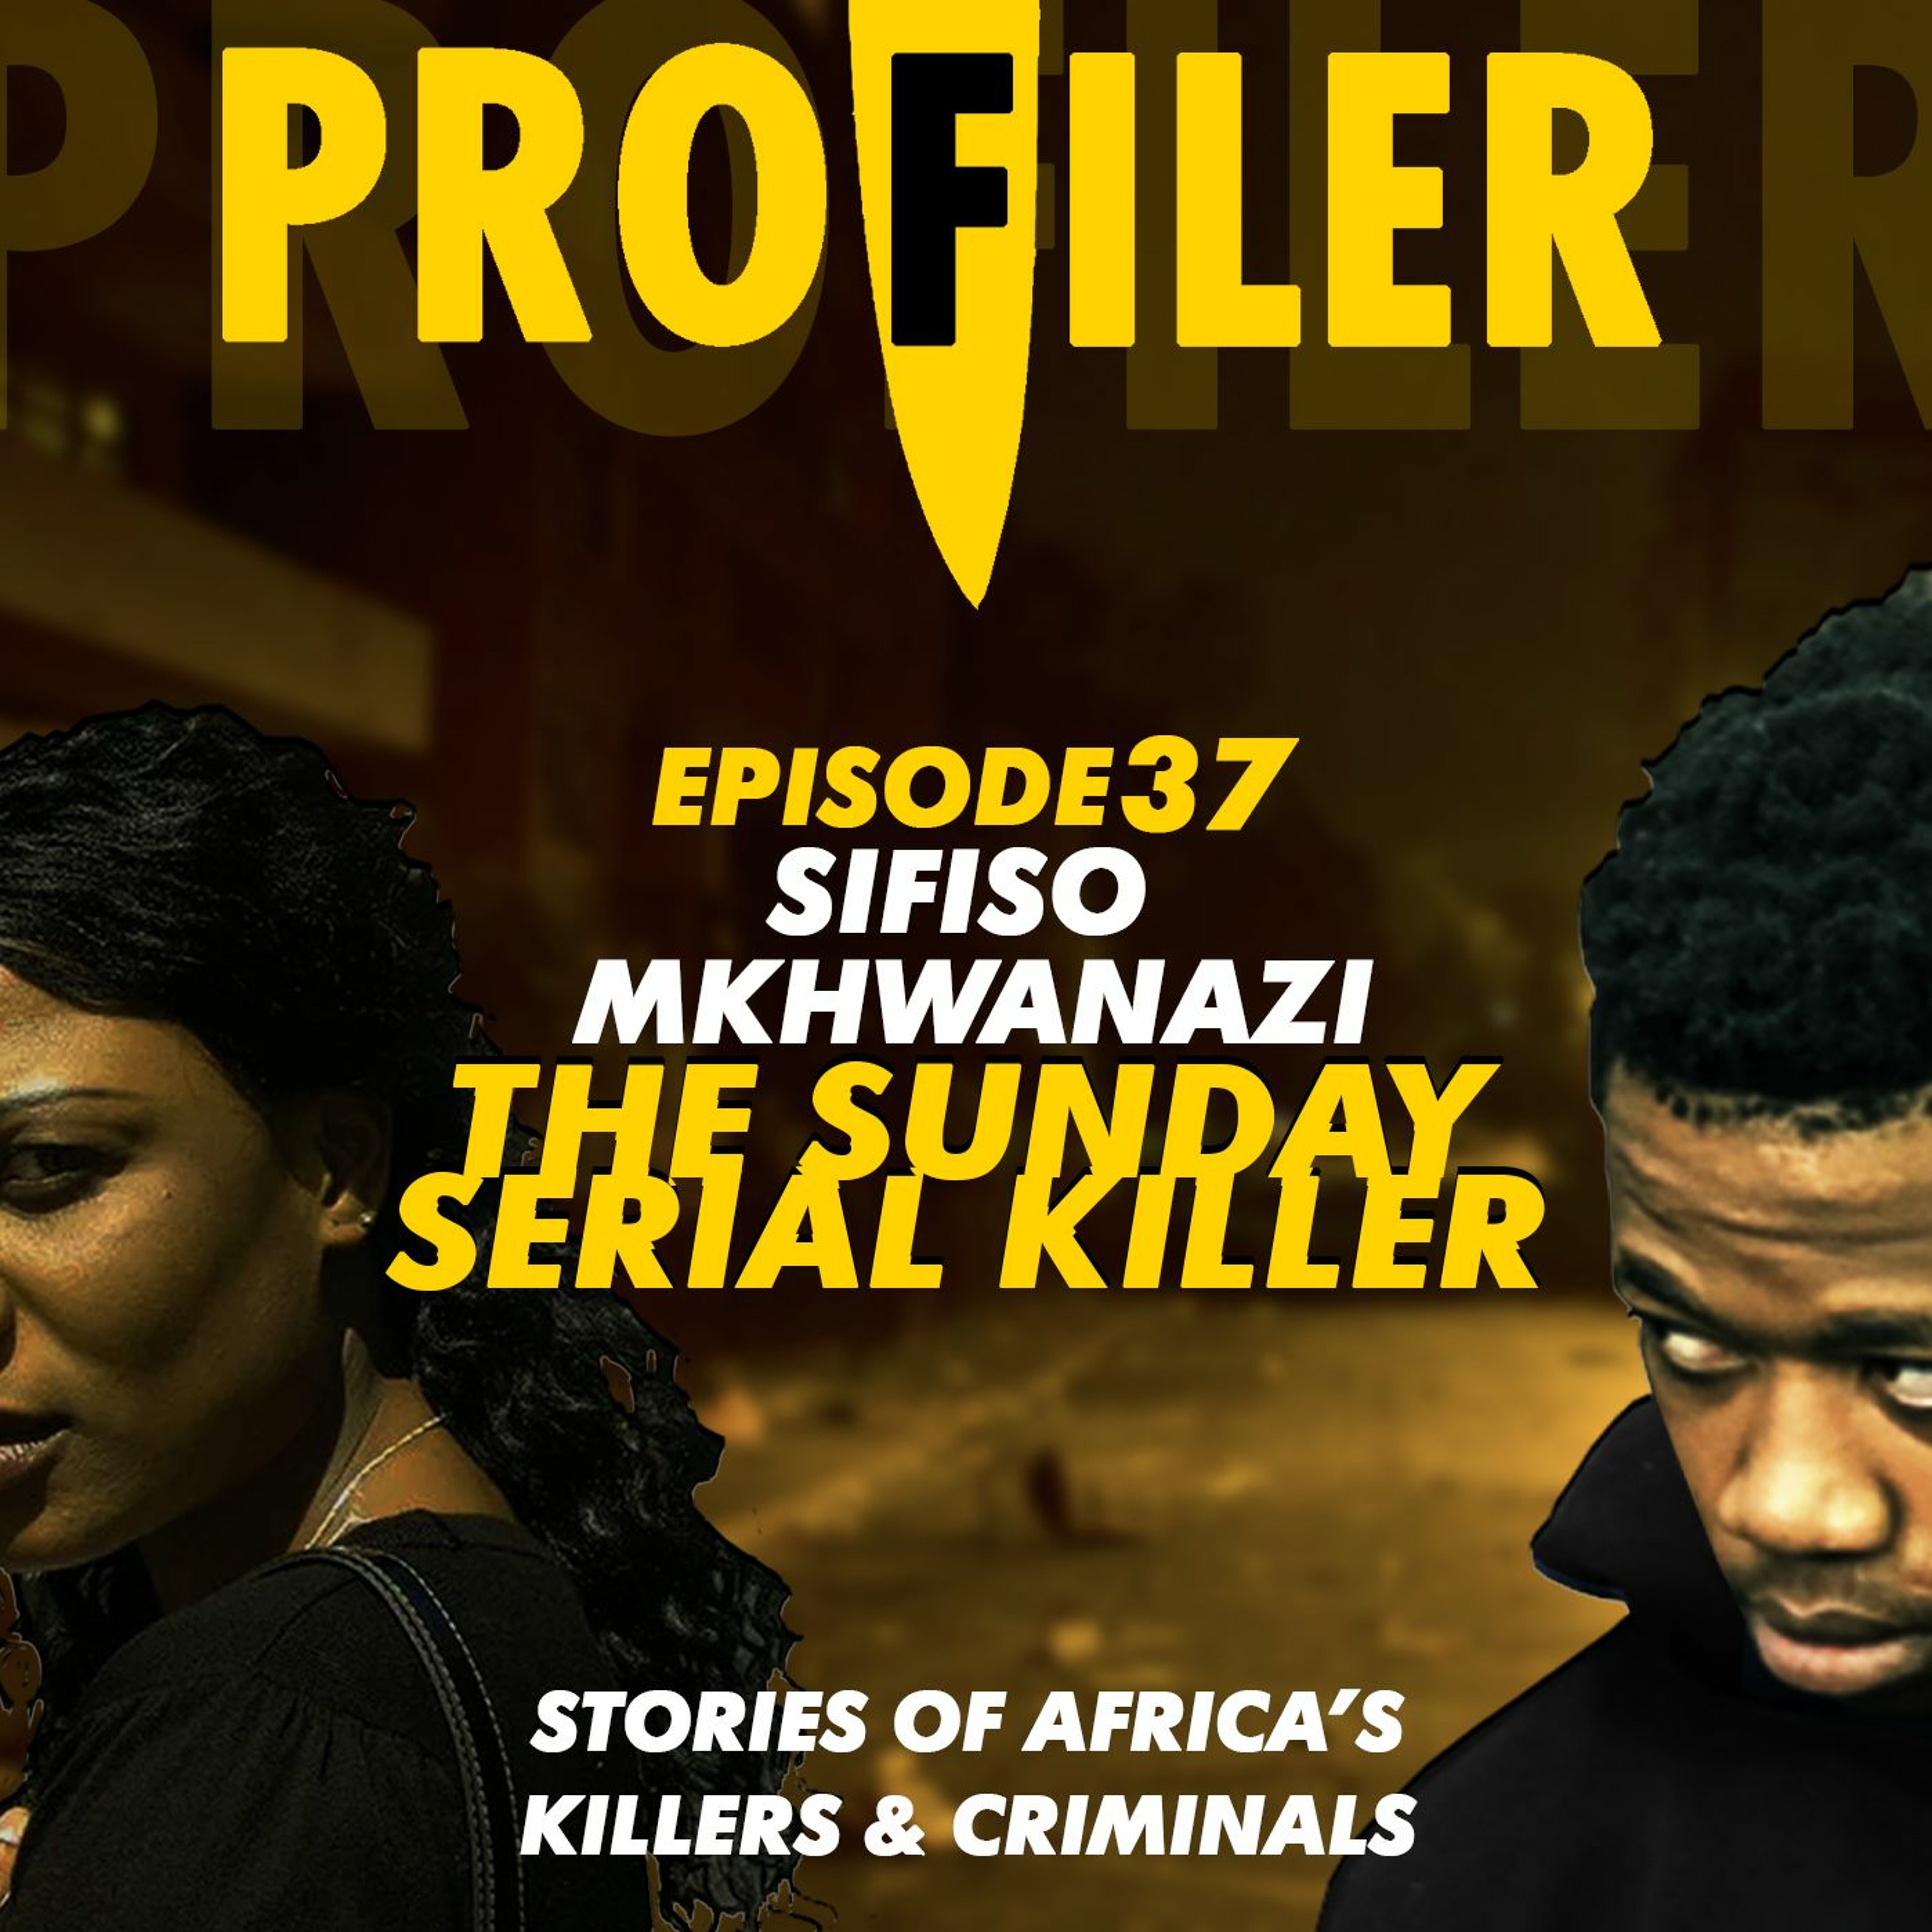 PROFILER EP 37 - The Sunday Serial Killer Sifiso Mkhwanazi